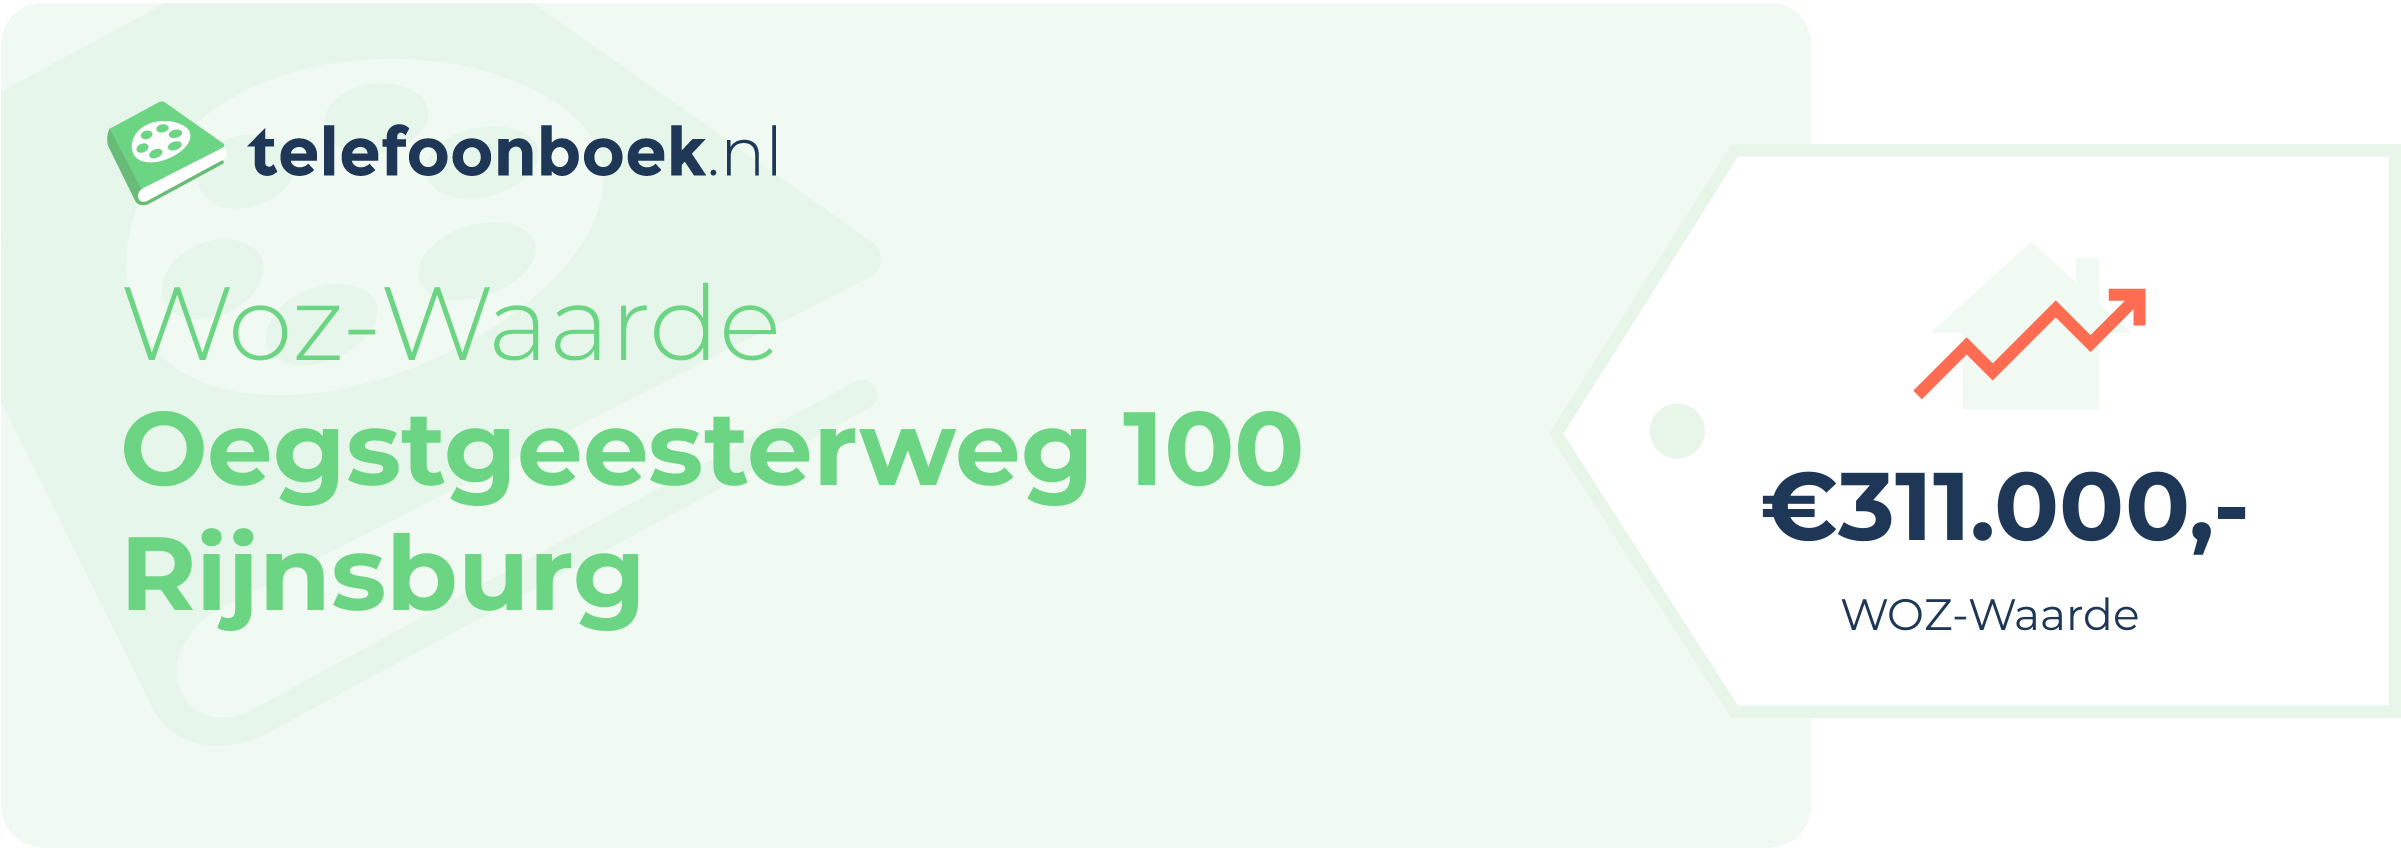 WOZ-waarde Oegstgeesterweg 100 Rijnsburg